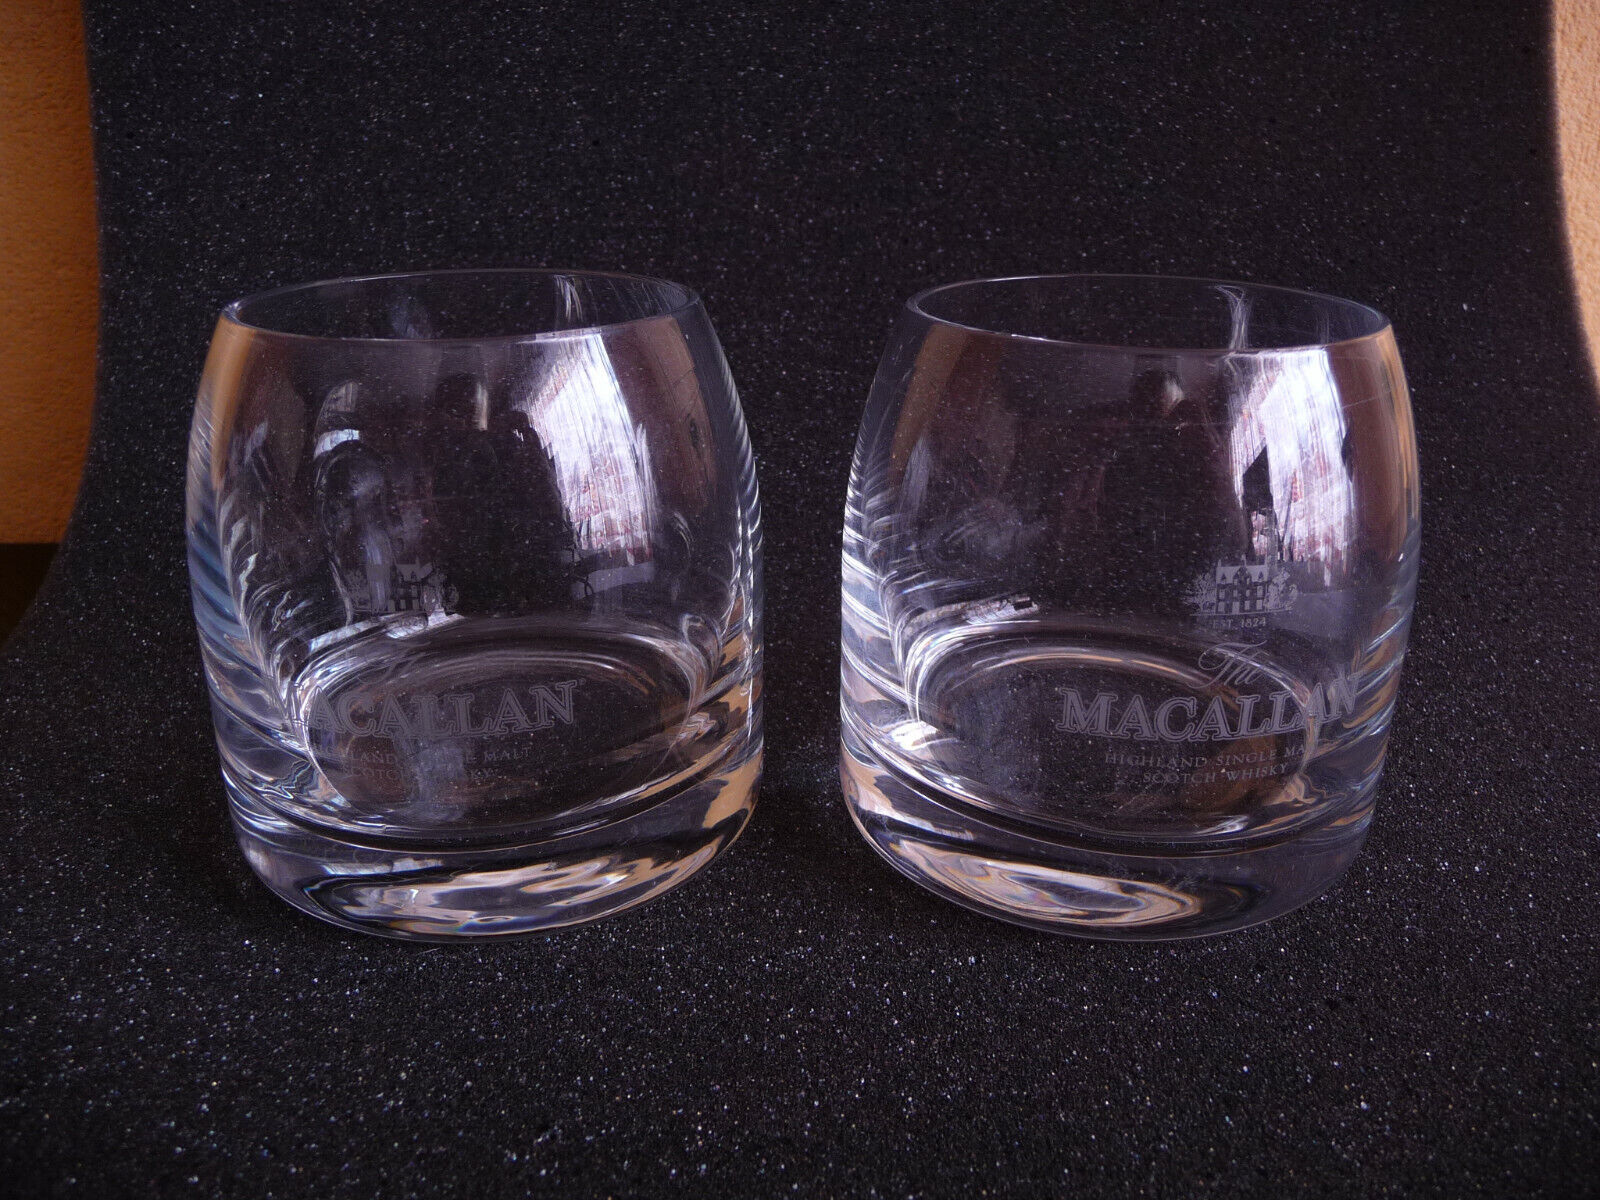  2pcs The Macallan Highland Single Malt Scotch Whiskey Tumbler glasses used rare